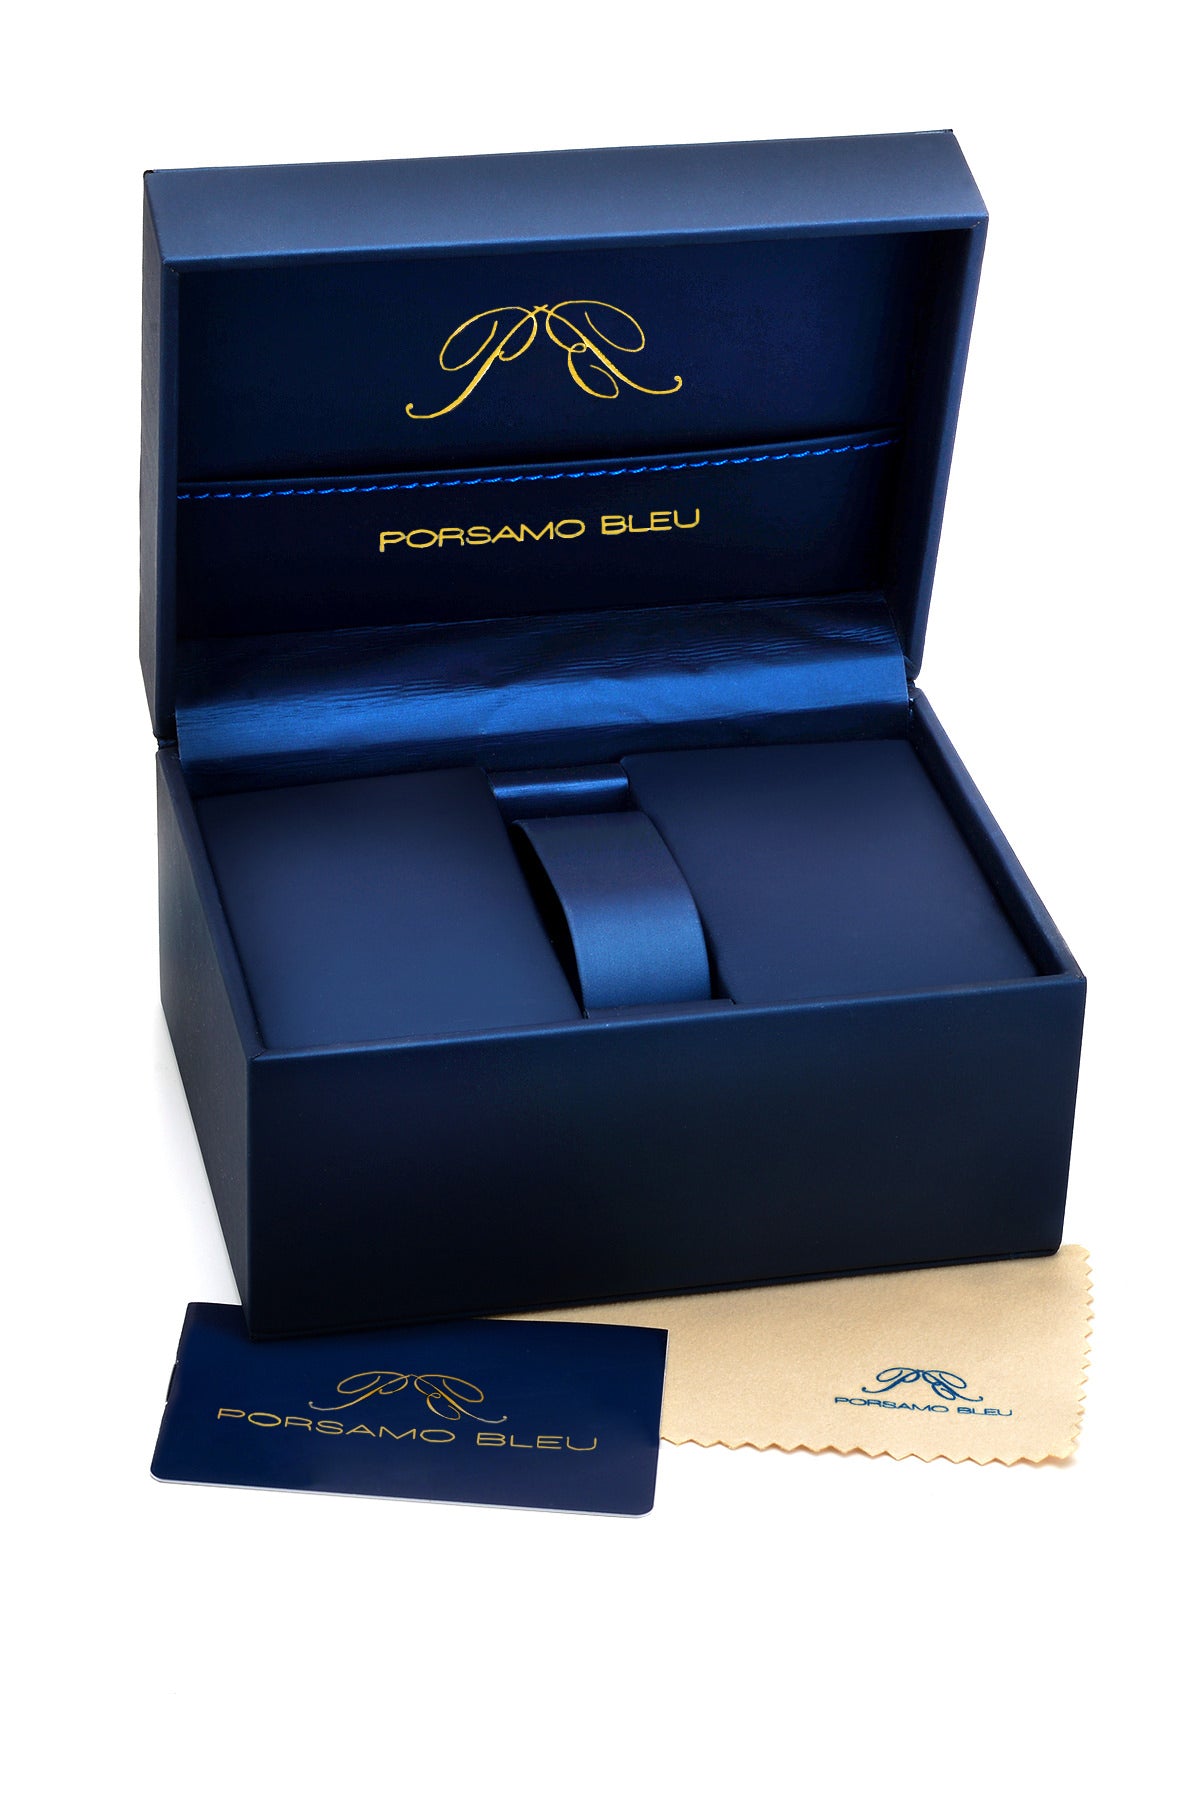 Porsamo Bleu Connor luxury chronograph men's watch, genuine leather band, black, yellow 421CCOL